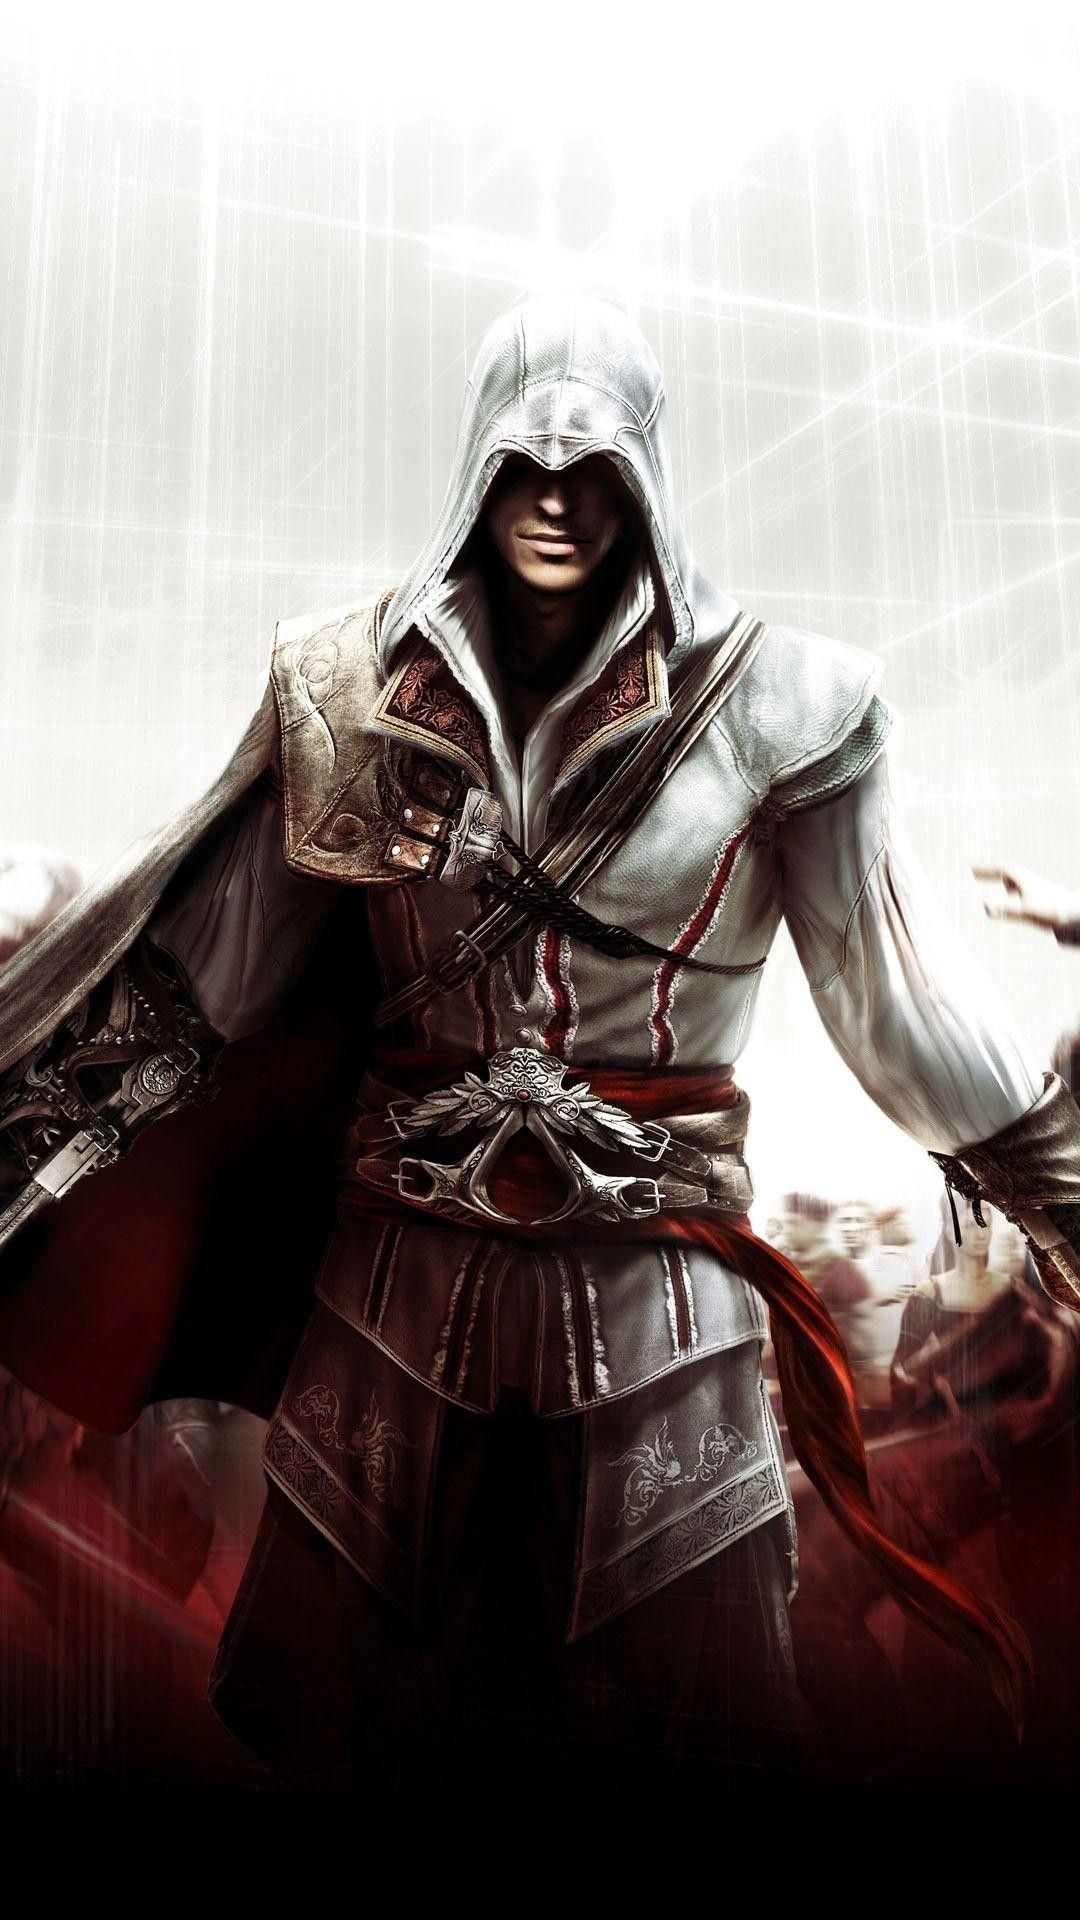 500 anni fa moriva Ezio Auditore: Requiescat in Pace